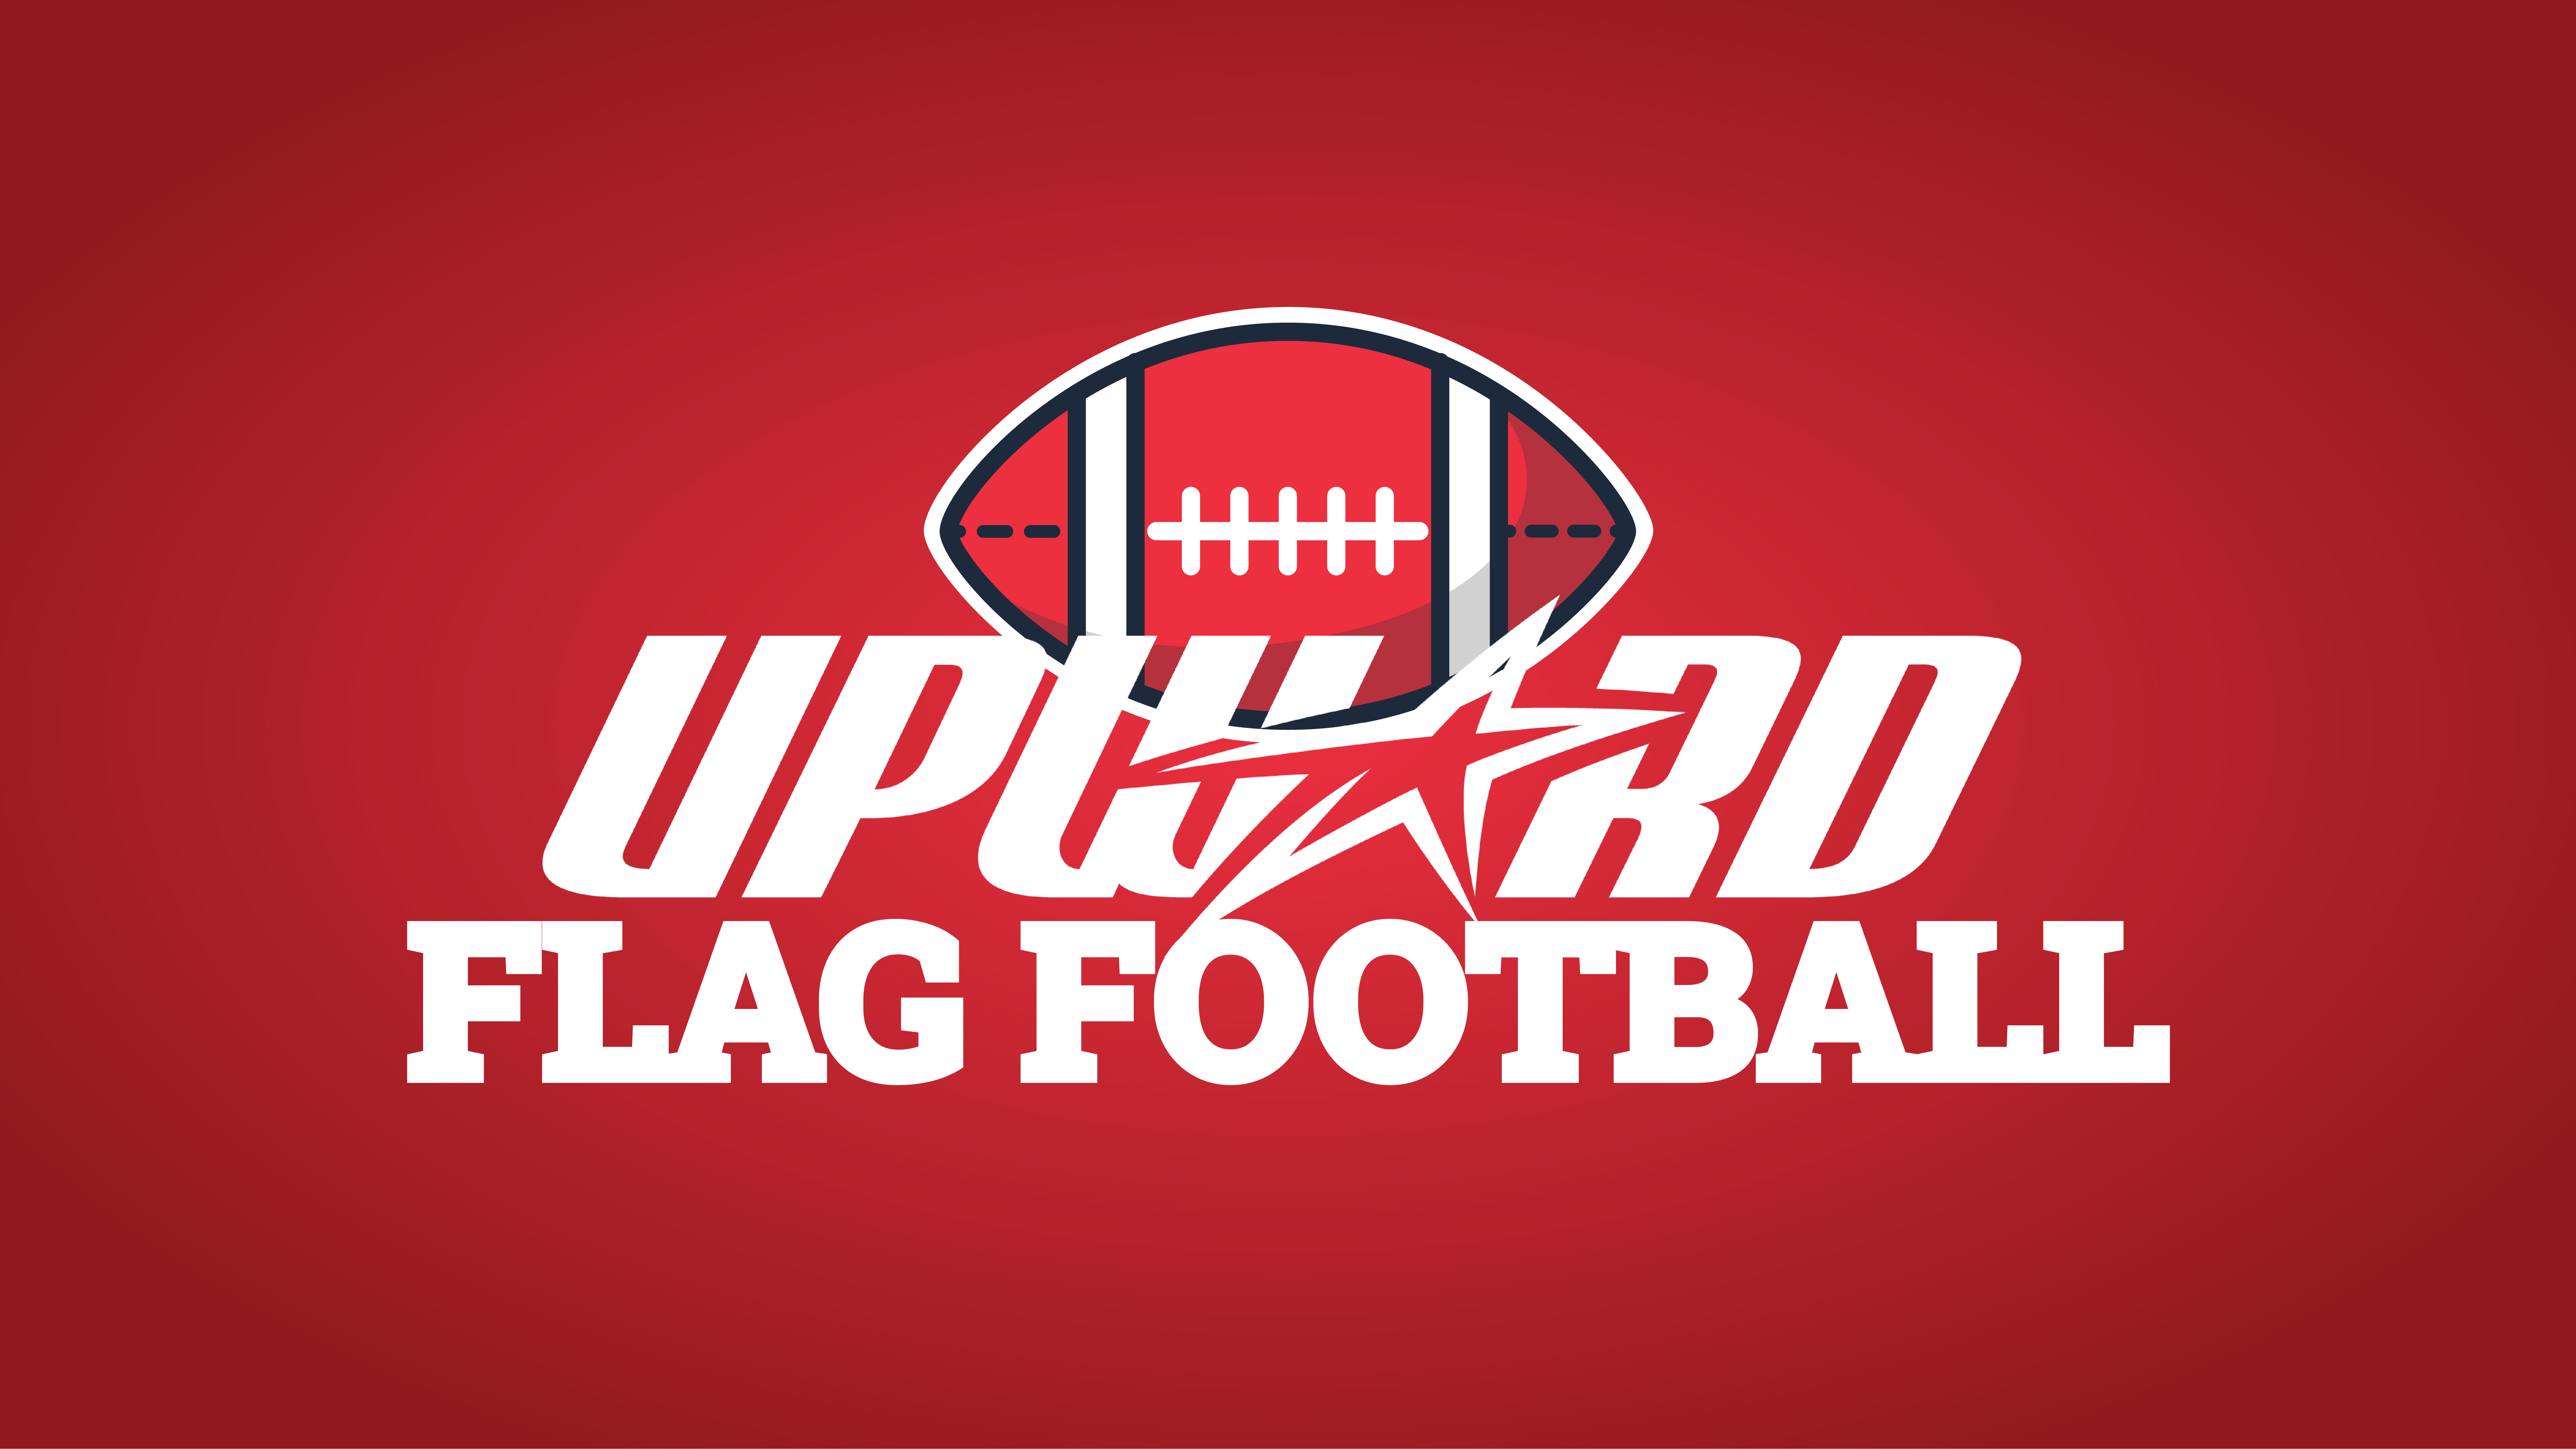 Upward Flag Football